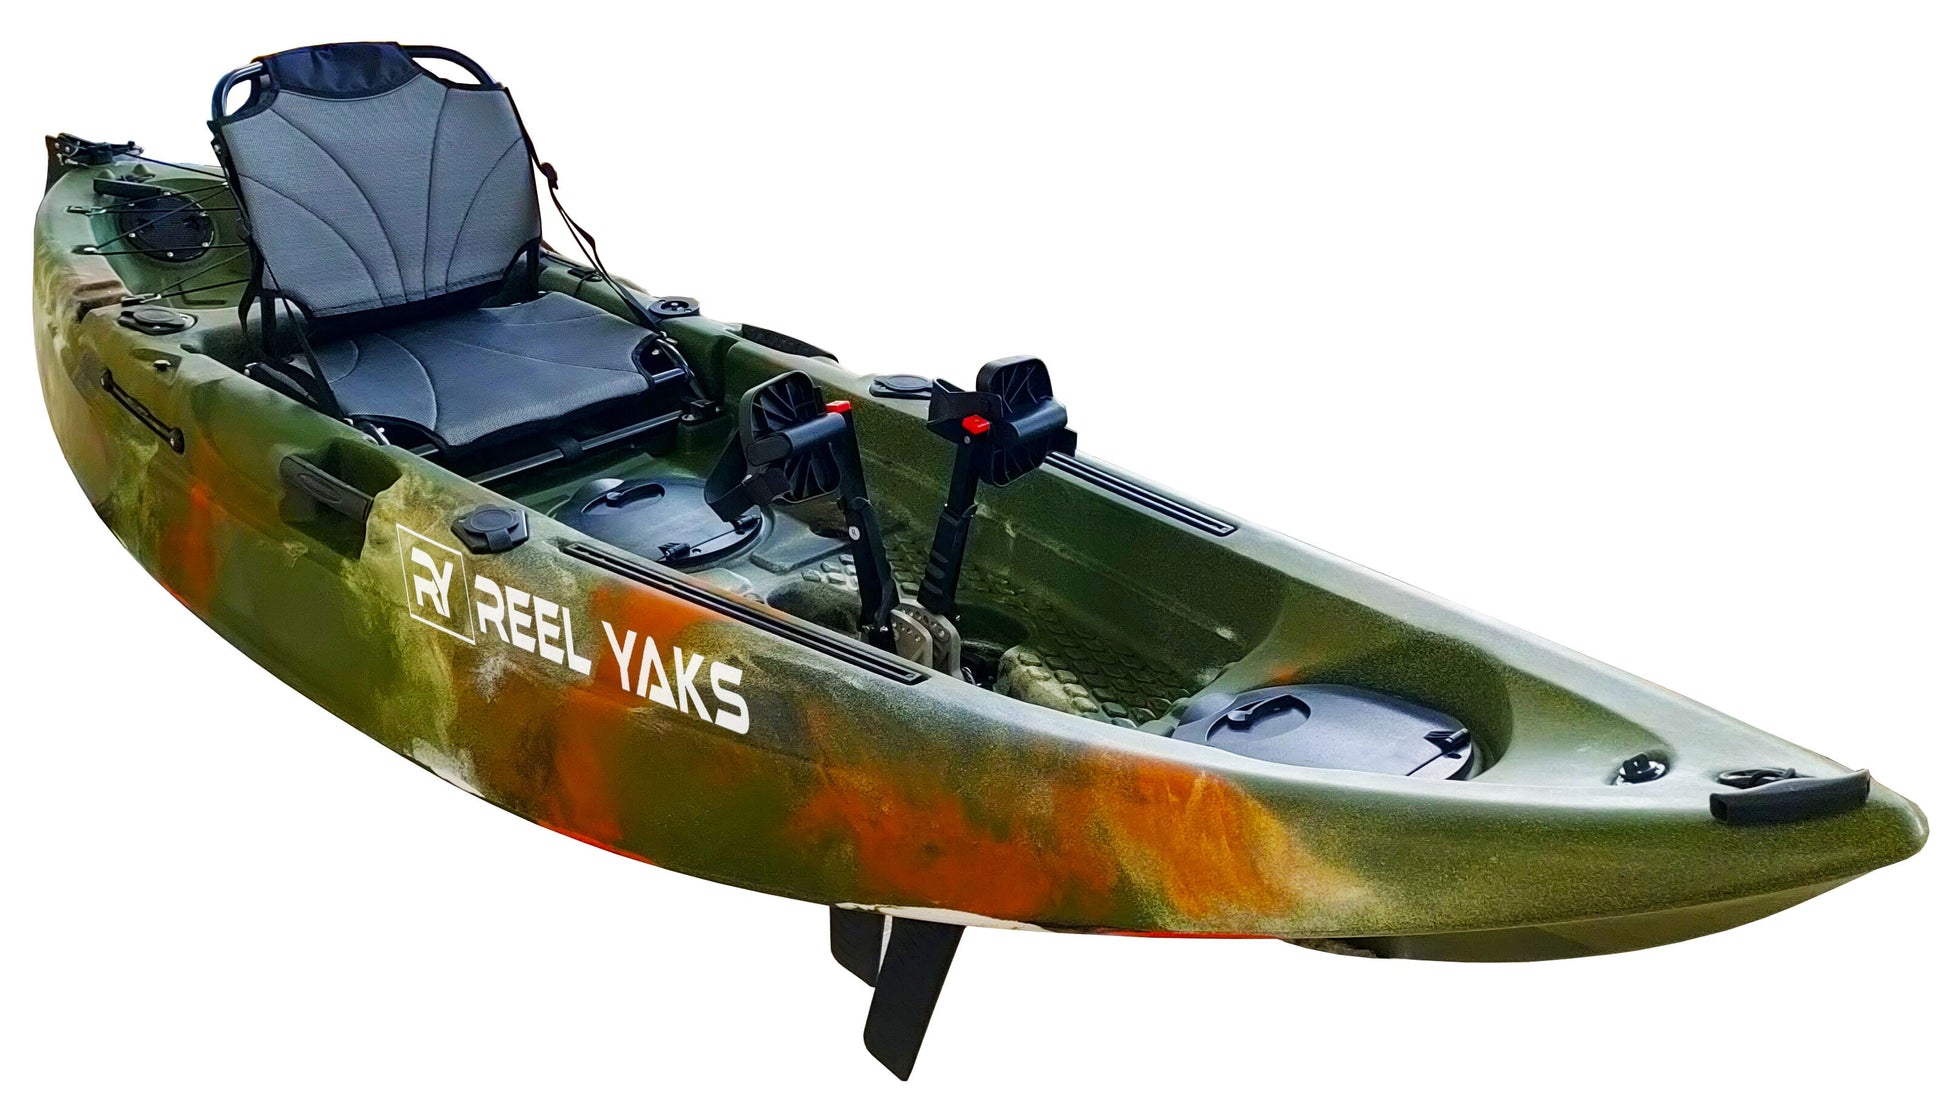 9.5' Razor Fin Drive Angler Kayak, 264 lbs capacity, powerful drive